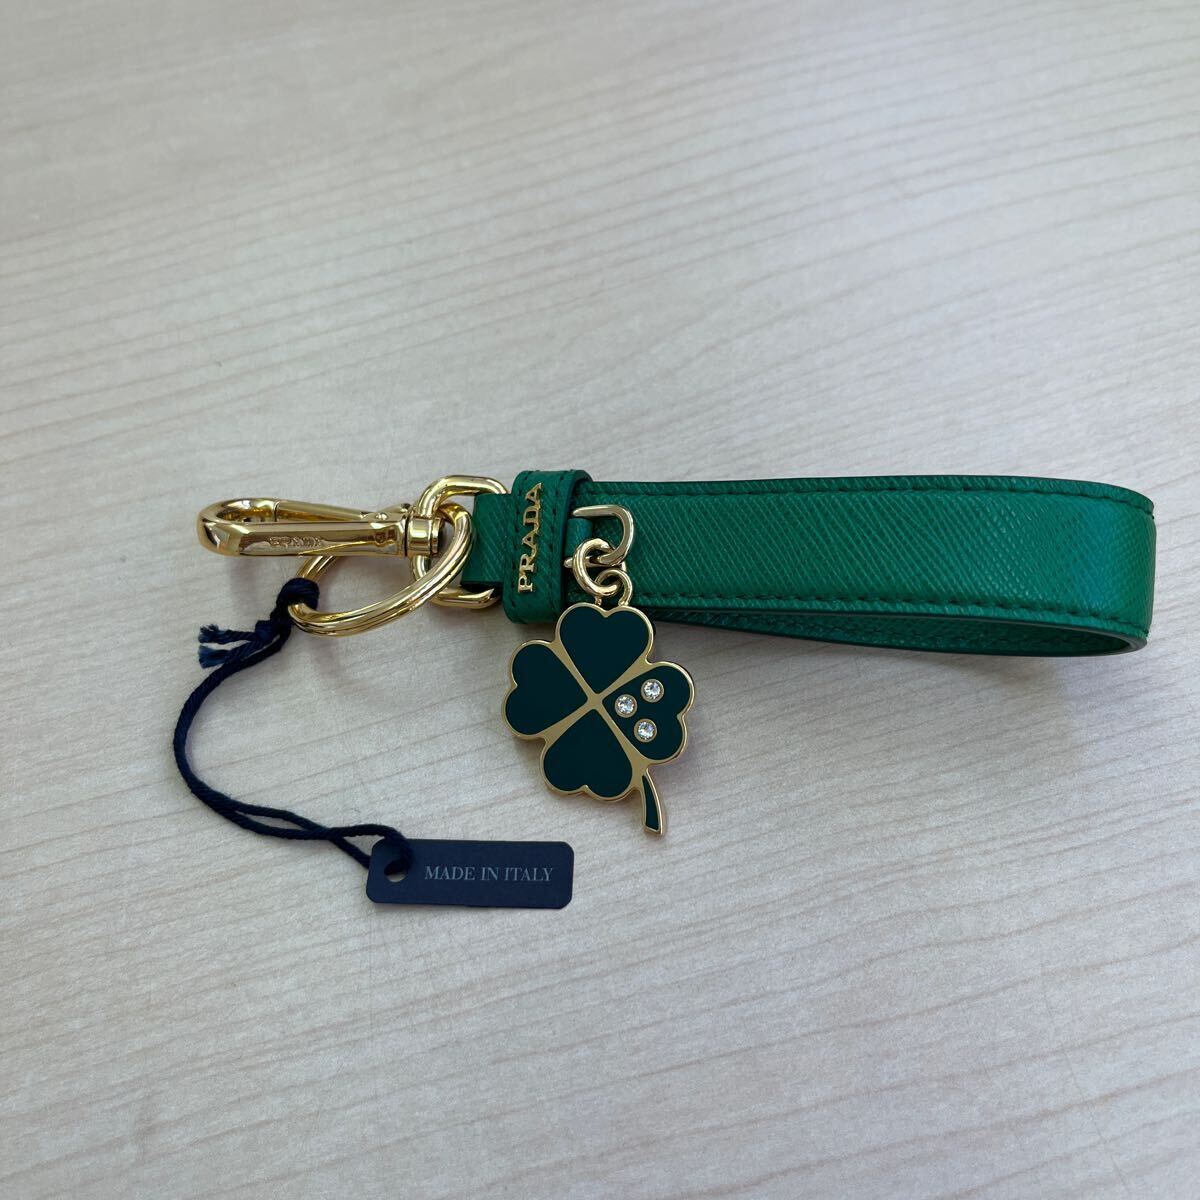 PRADA Prada metal clover key holder men's lady's key ring leather box equipped 